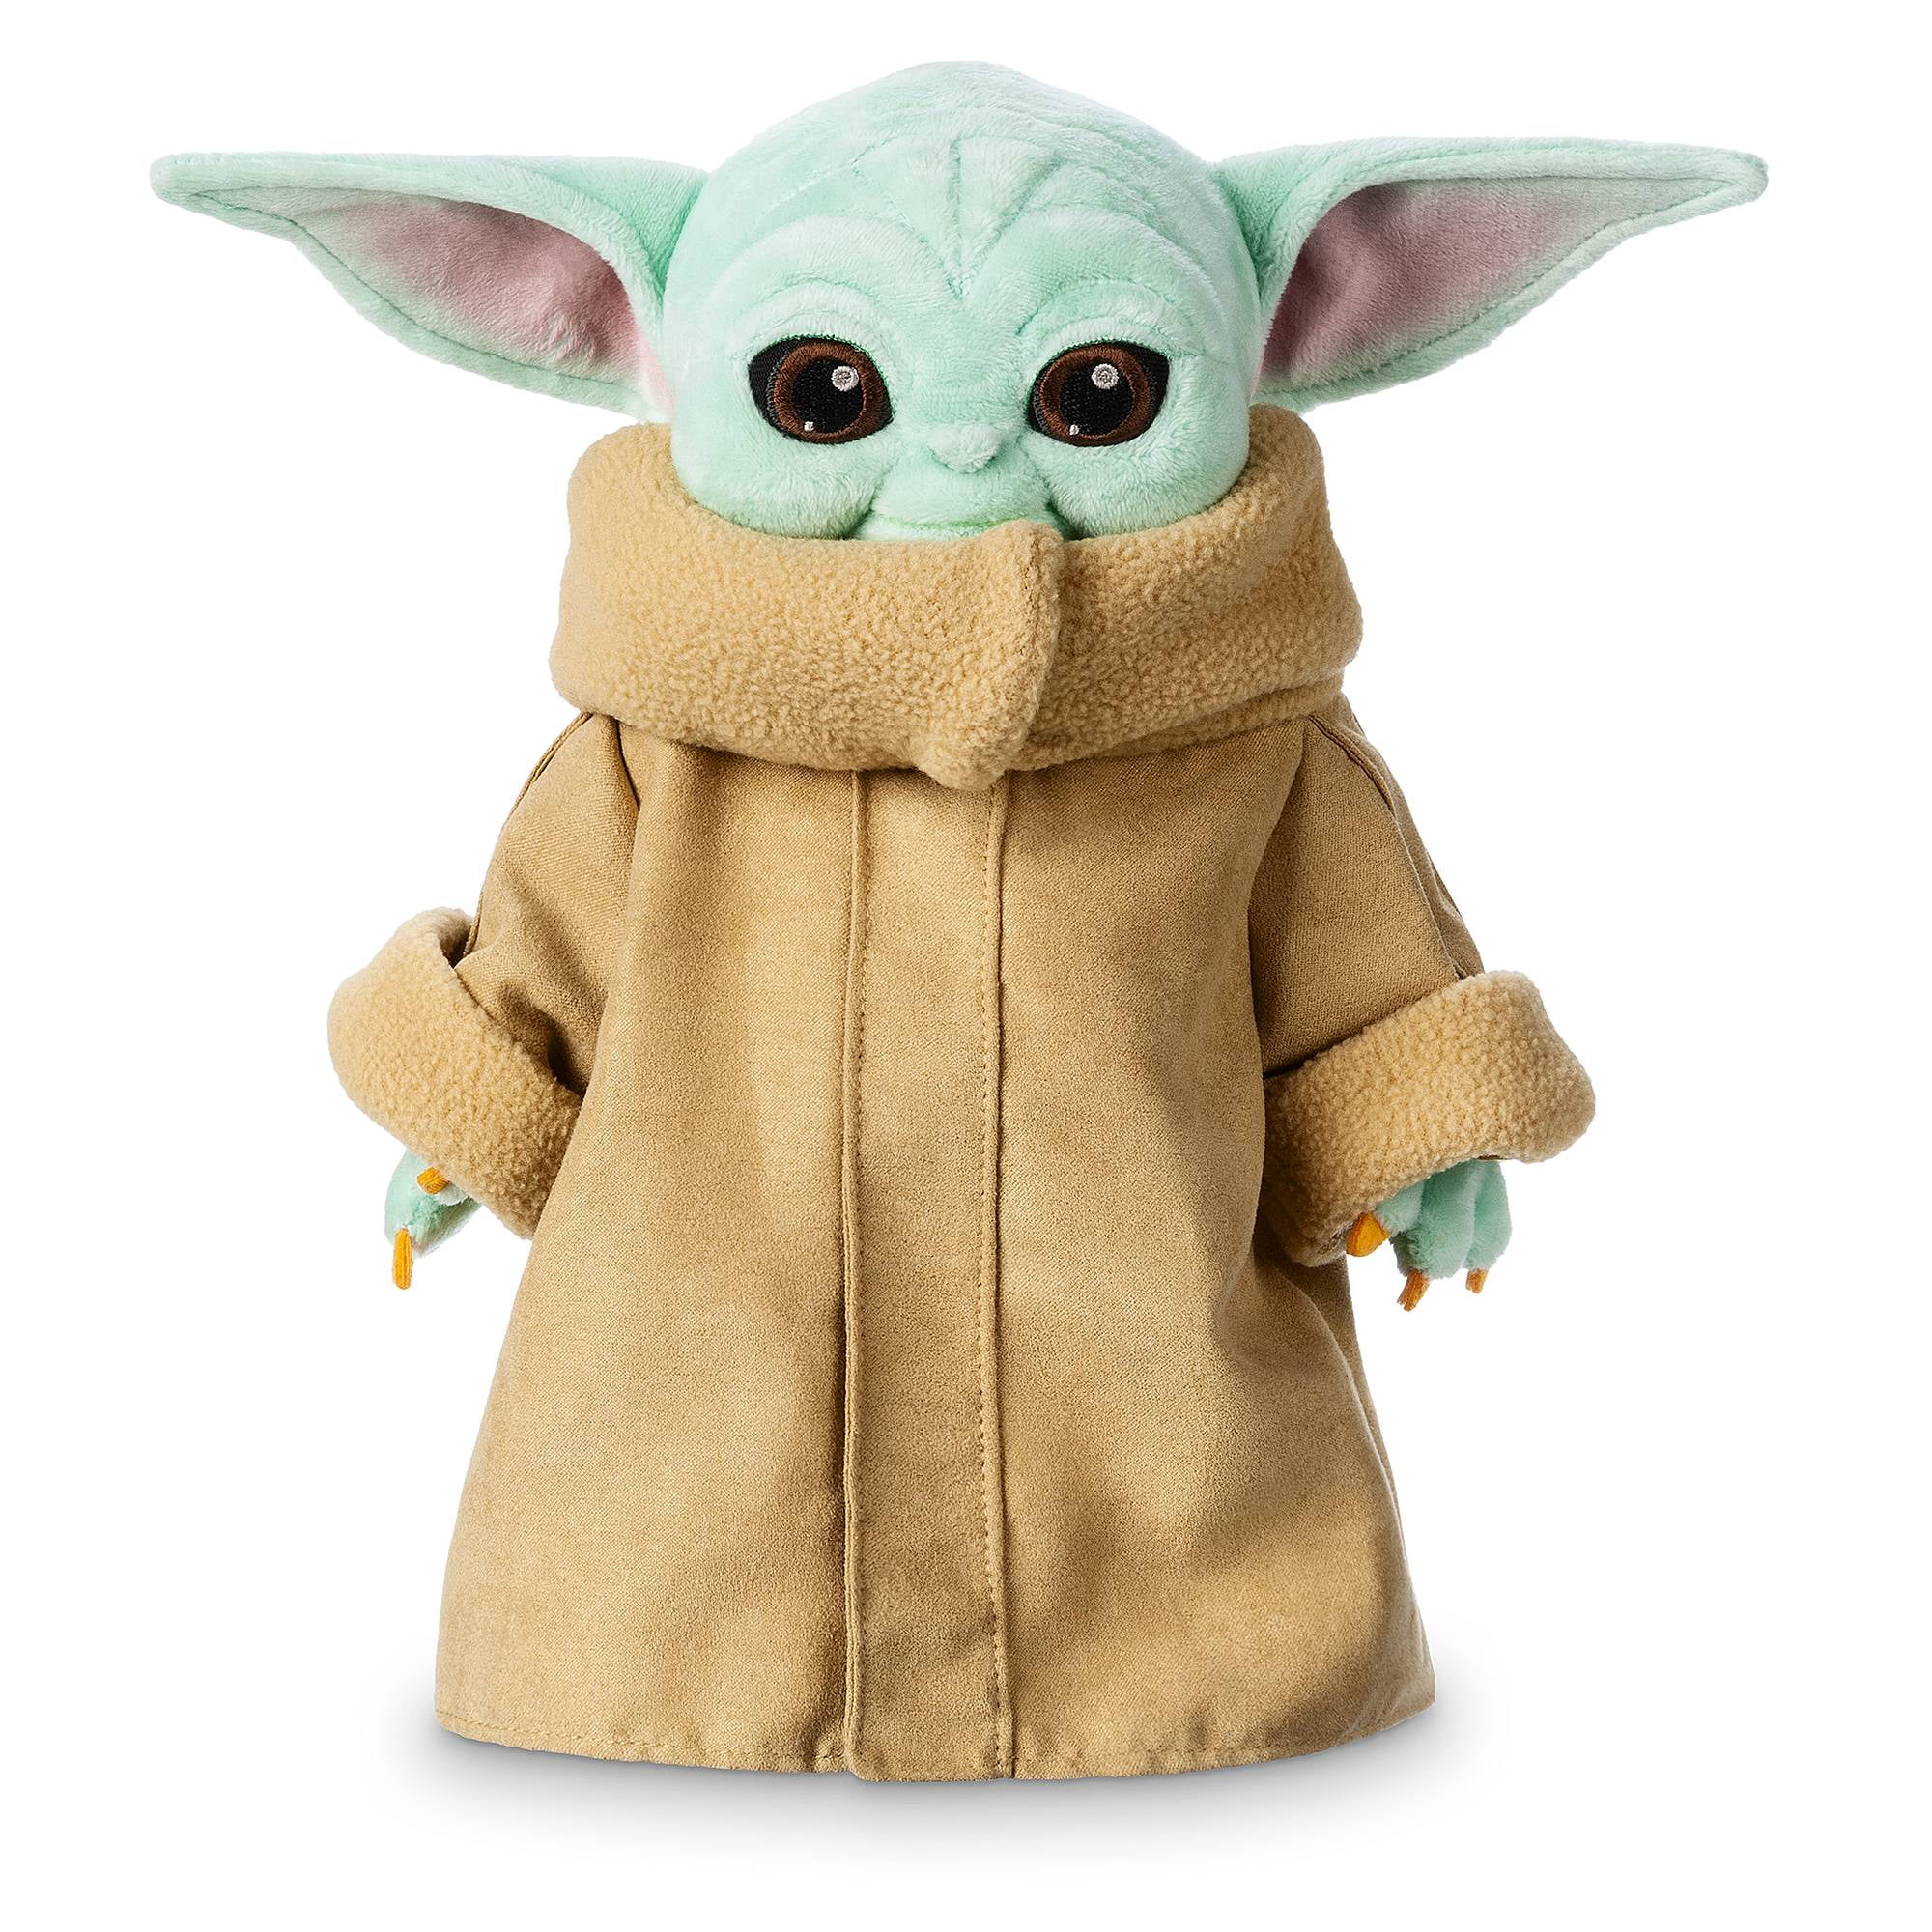 22cm Star Wars The Mandalorian The Child Baby Yoda Plush Doll Soft Toy Xmas Gift 